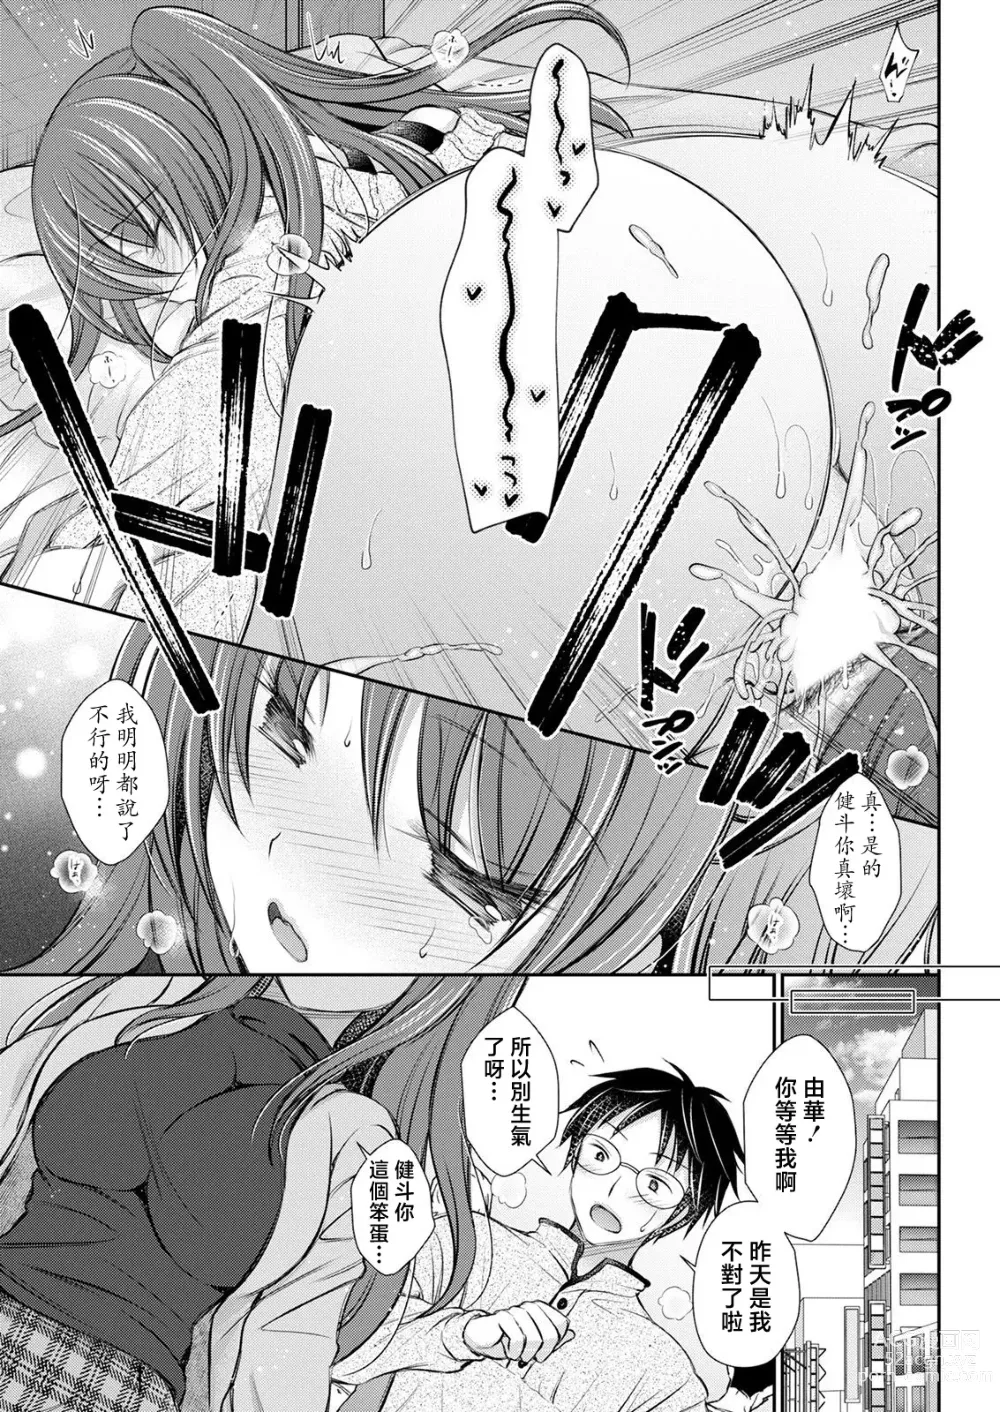 Page 3 of manga Koe o Kikasete